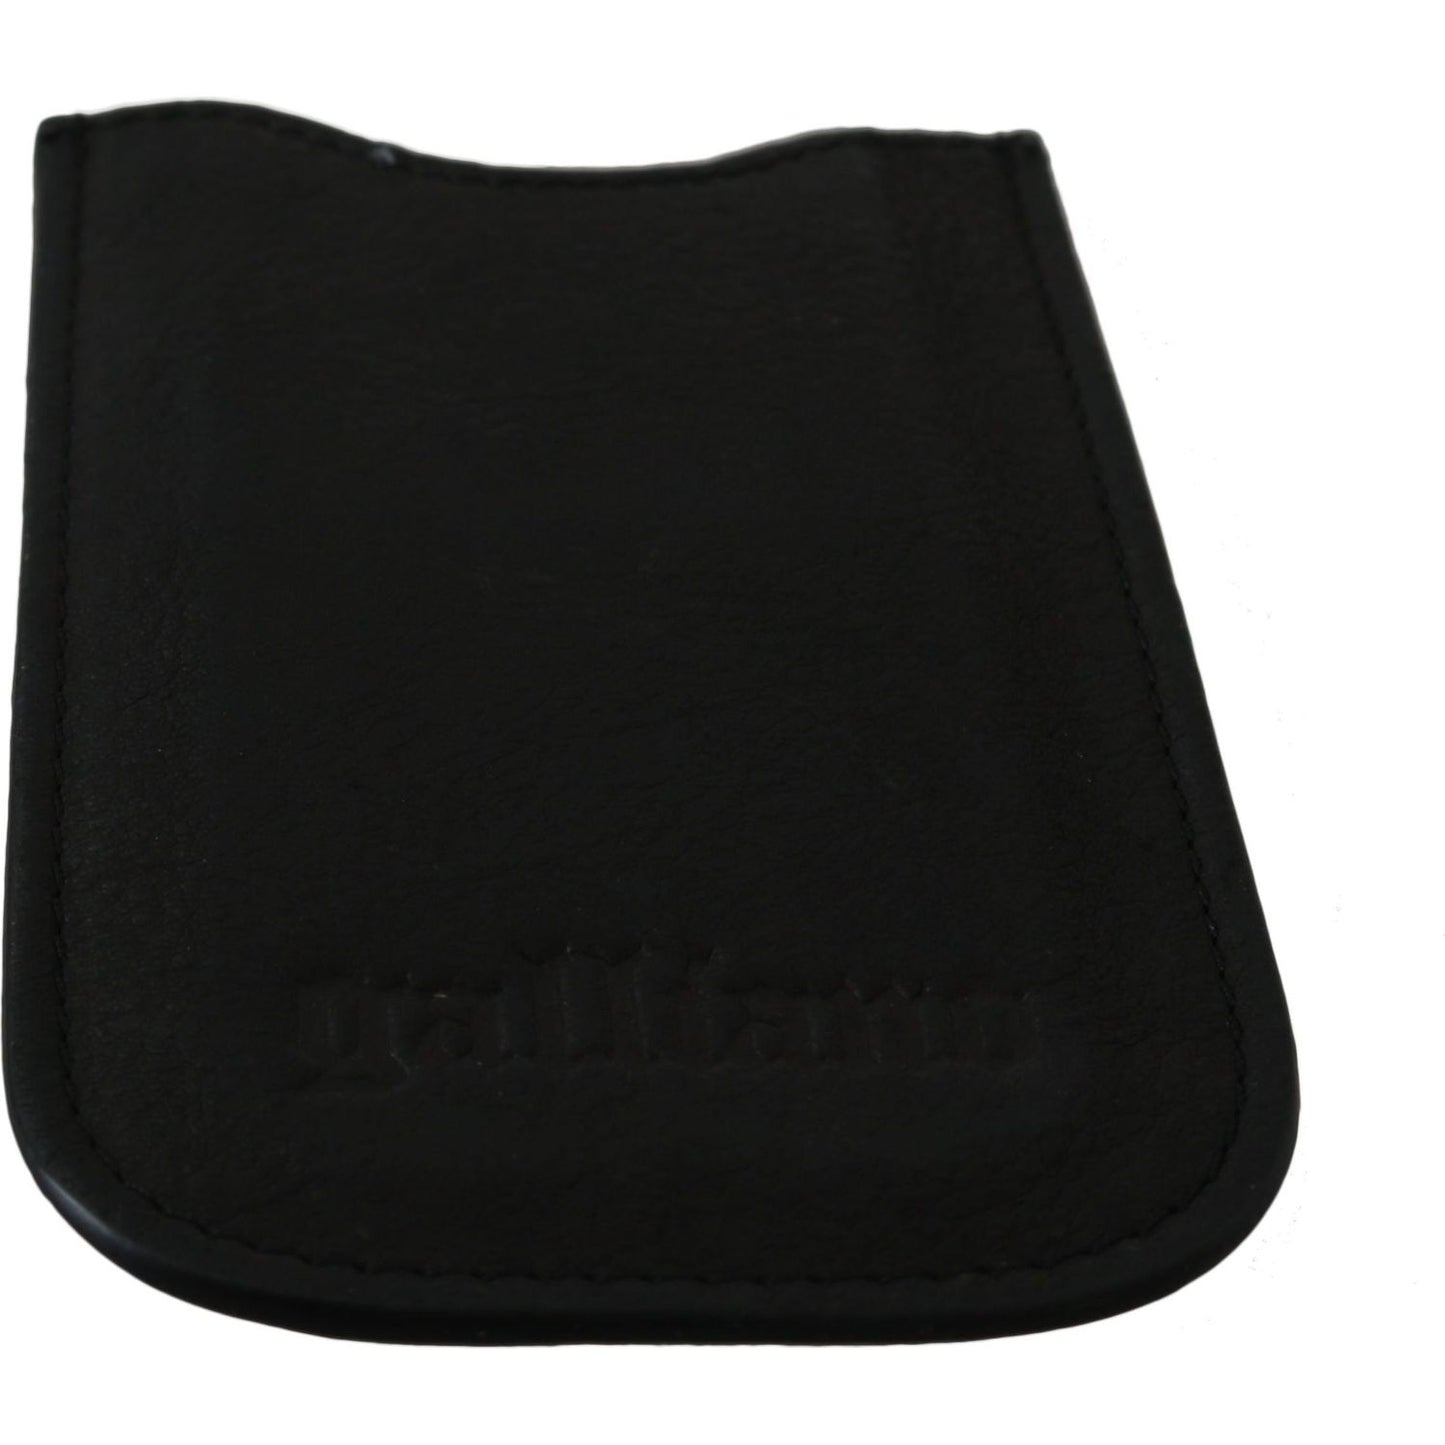 John Galliano Elegant Black Genuine Leather Men's Wallet Wallet black-leather-multifunctional-men-id-bill-card-holder-wallet IMG_1776-scaled-038b5f25-49e.jpg